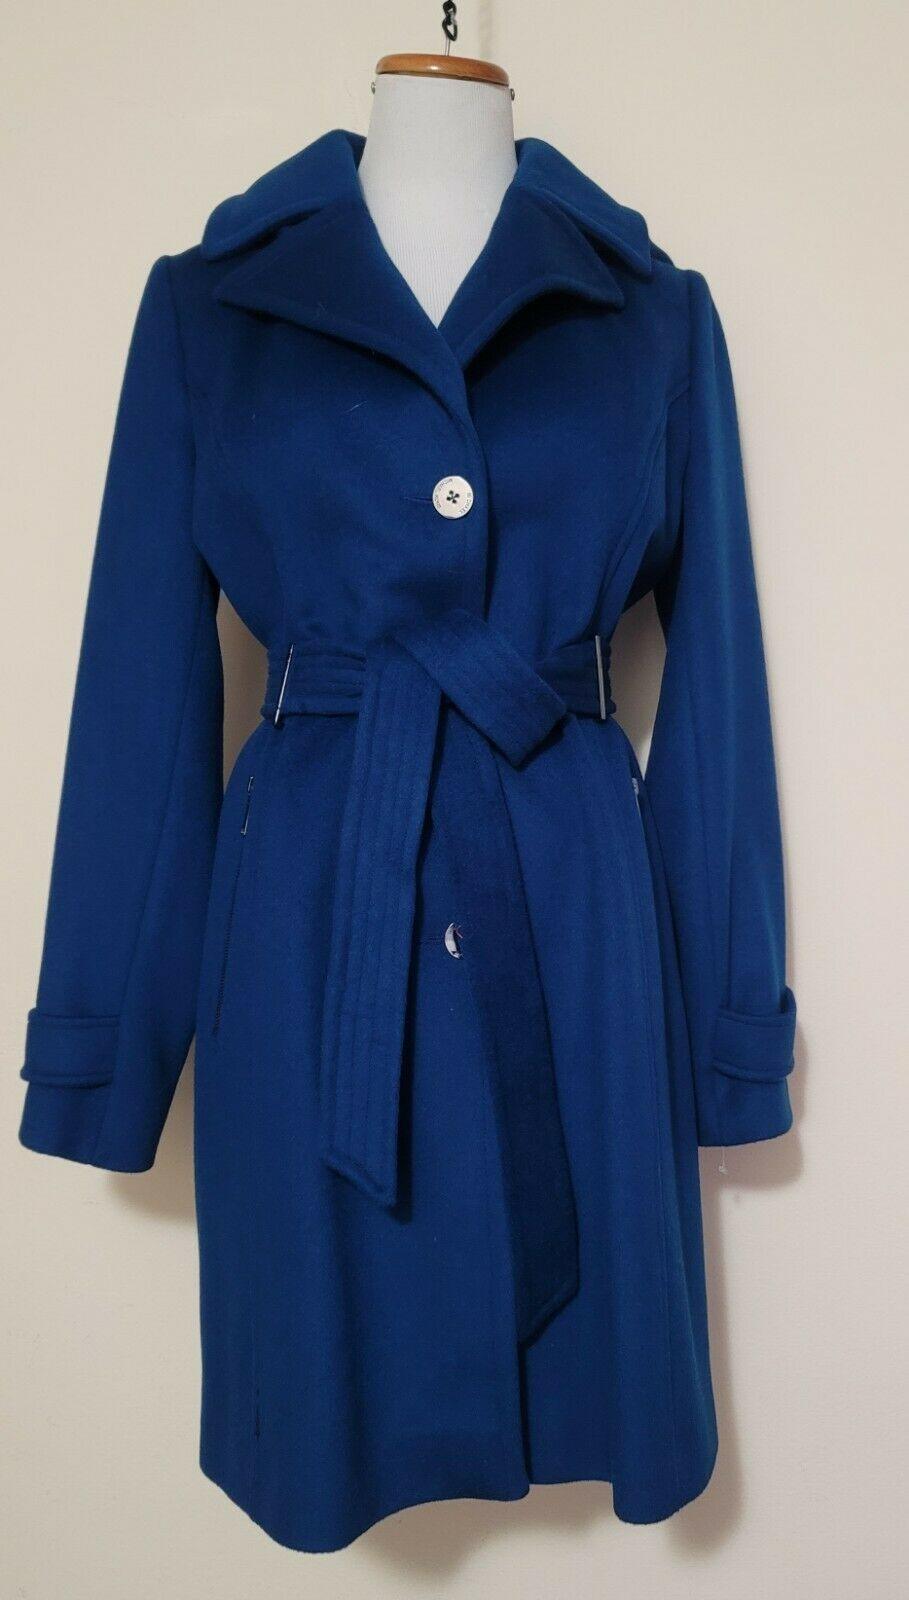 MICHAEL KORS Hooded Wool Blend Belted Blue Coat Size S - SVNYFancy